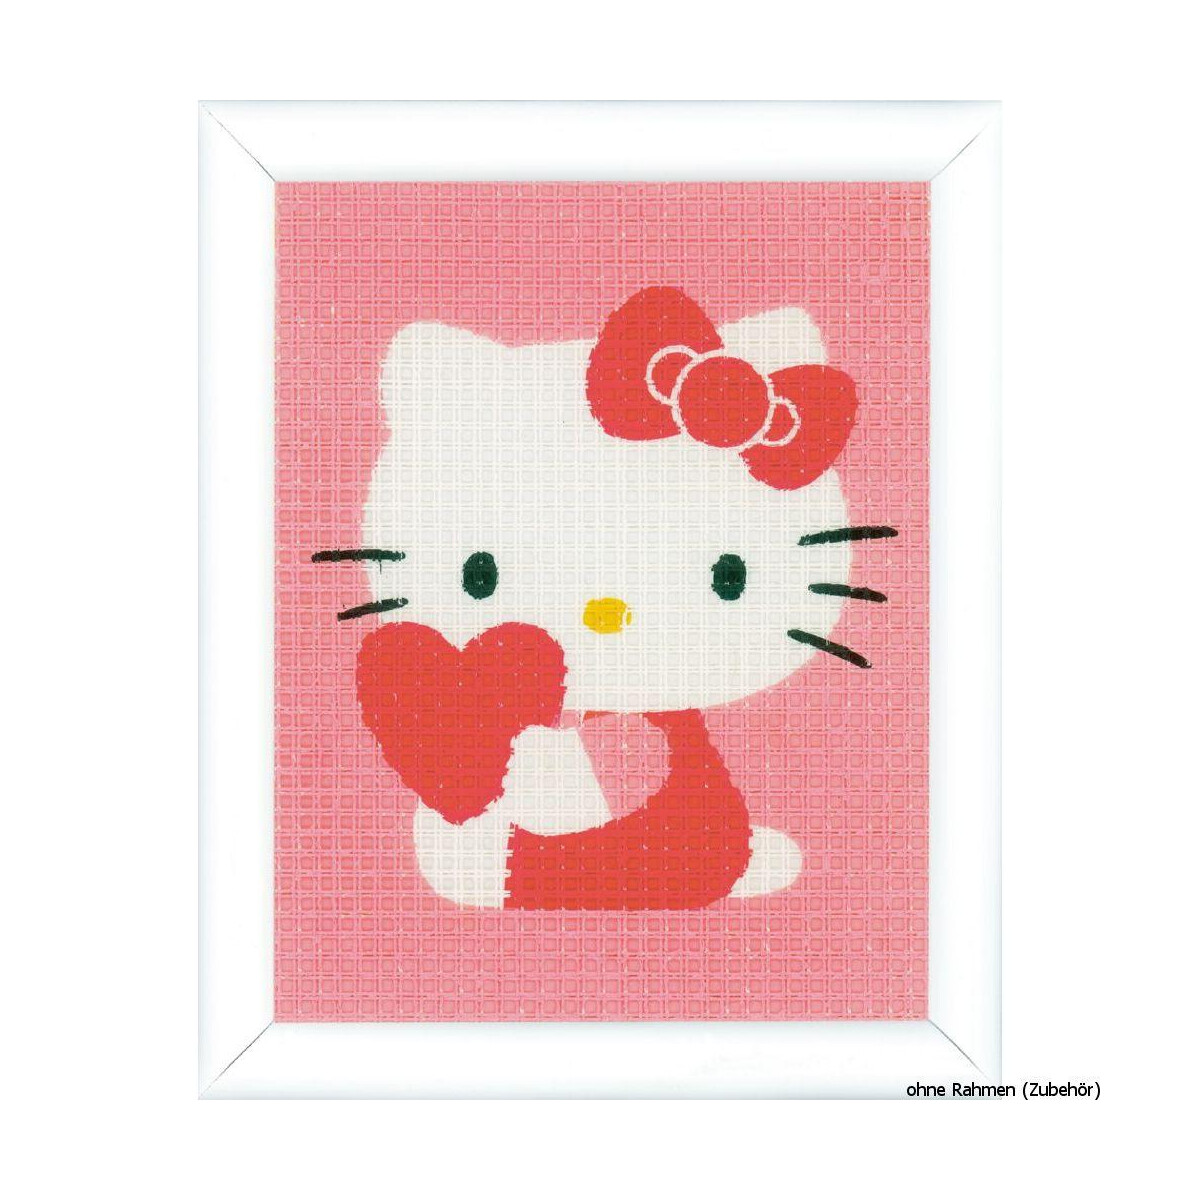 Vervaco borduurpakket "Hello Kitty met hart",...